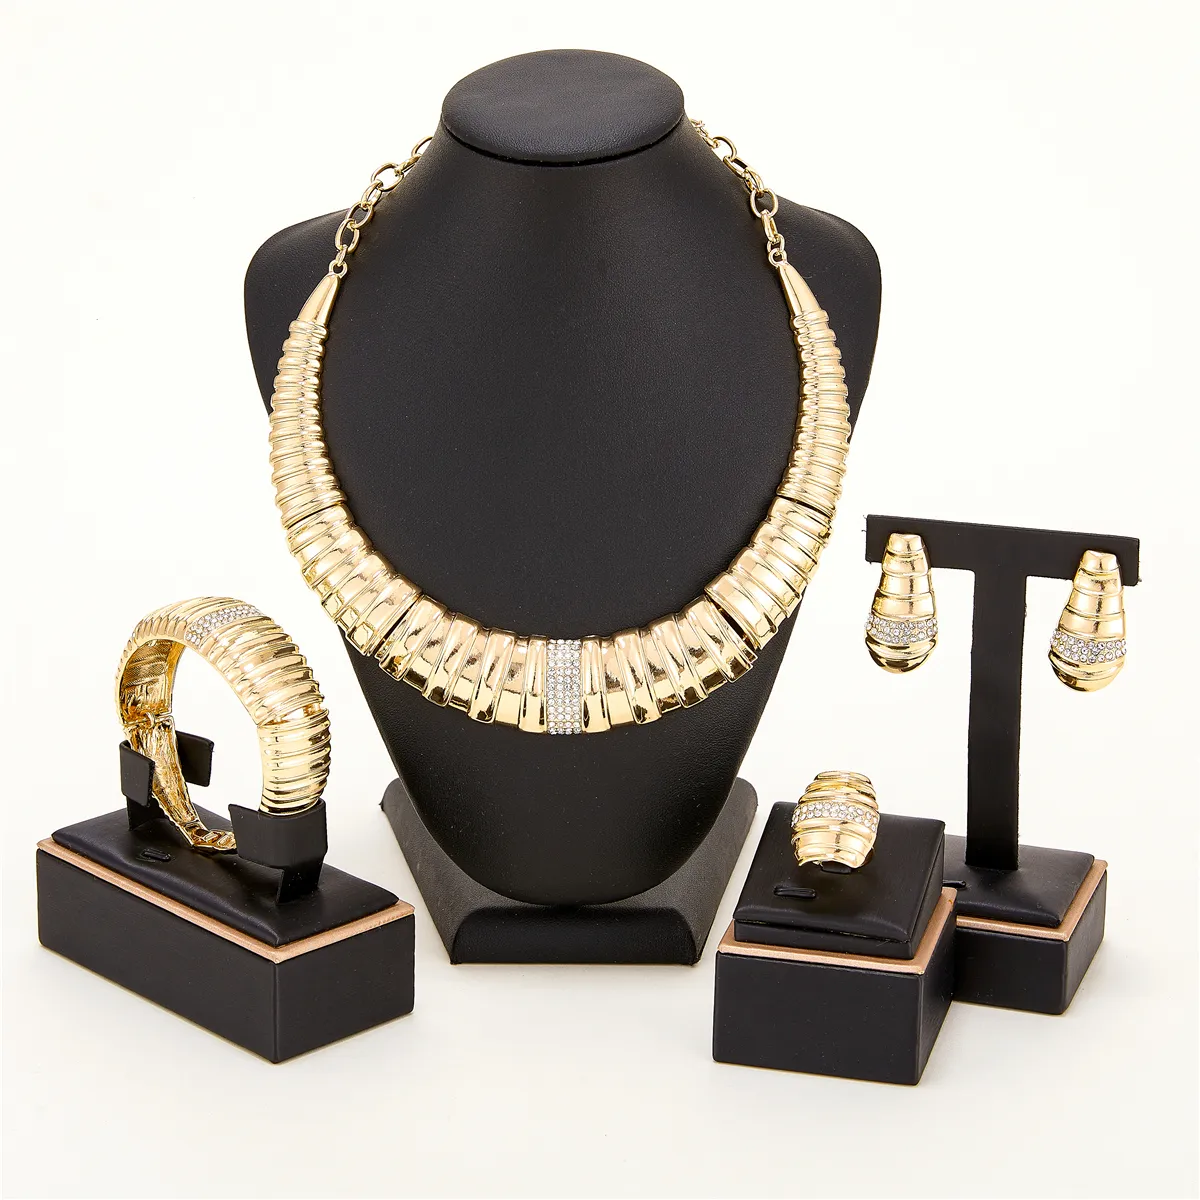 Neueste Design Mode Afrikanischer Großhandel Schmuck liefert Afrika Schmuck 18 Karat Gold gefüllt Halskette Armband Ohrring Ring